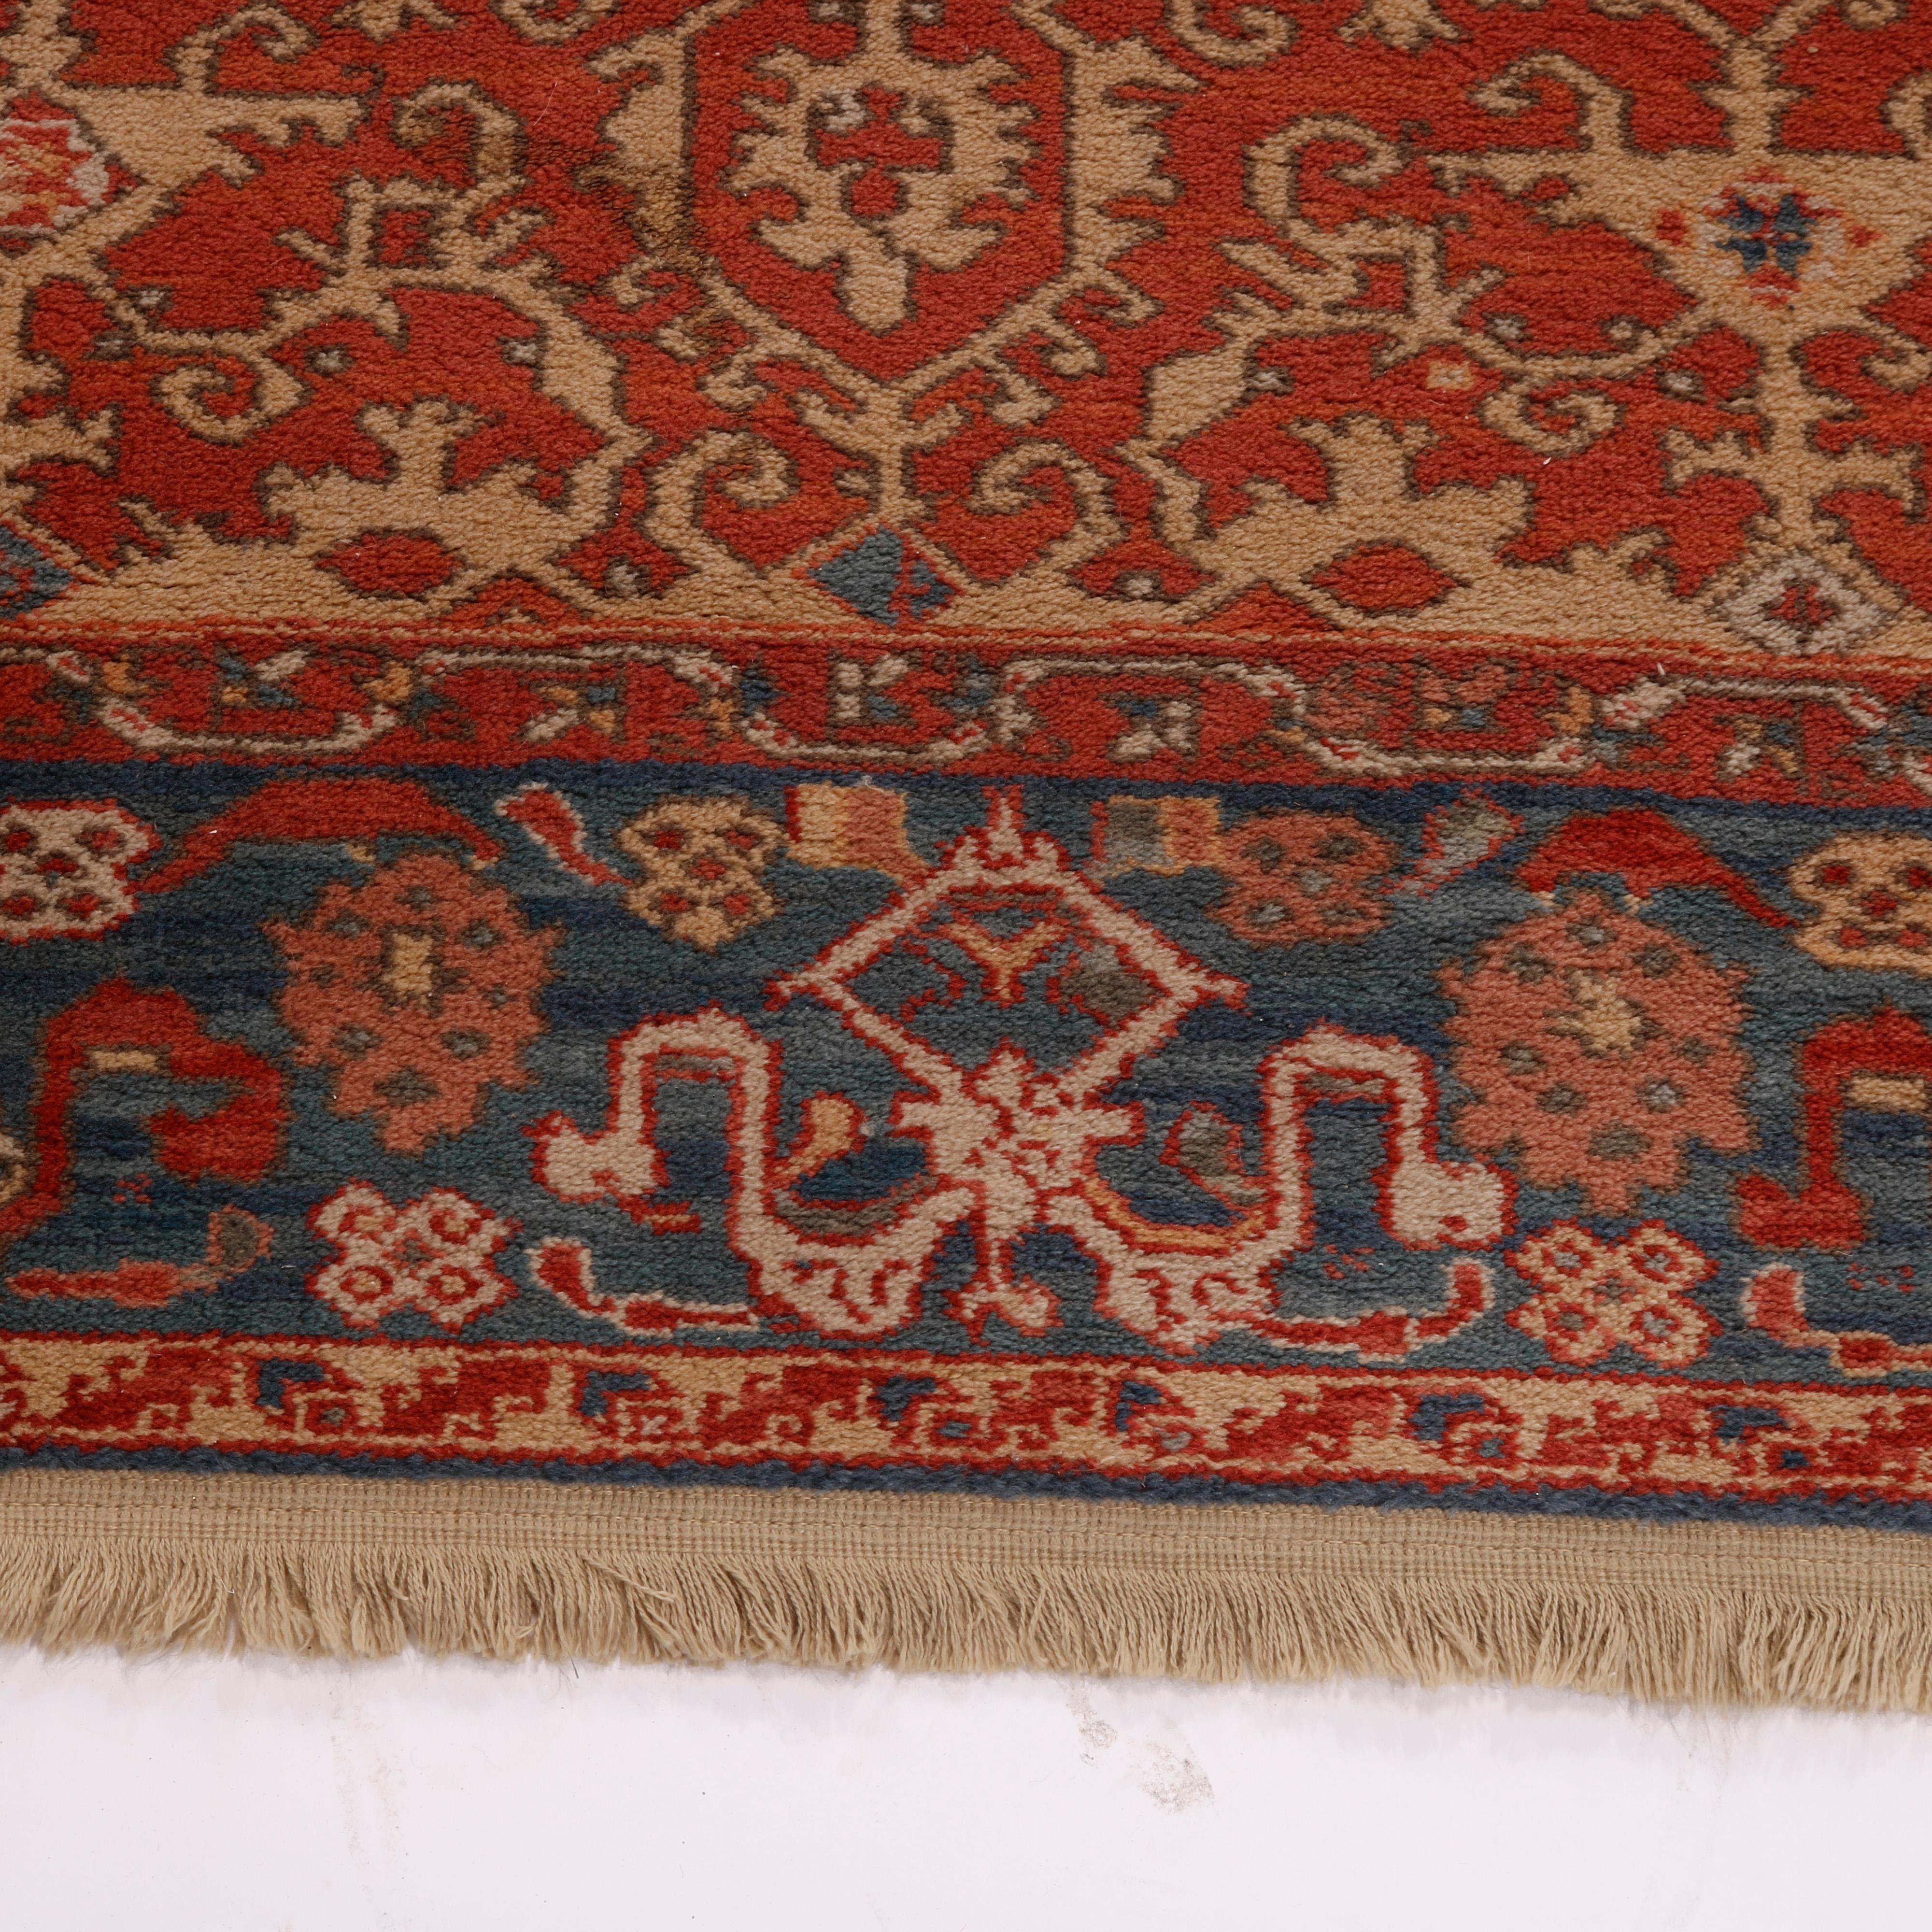 Woven Colonial Williamsburg Karastan Ushak Oriental Rug, Pattern 552, 20th C